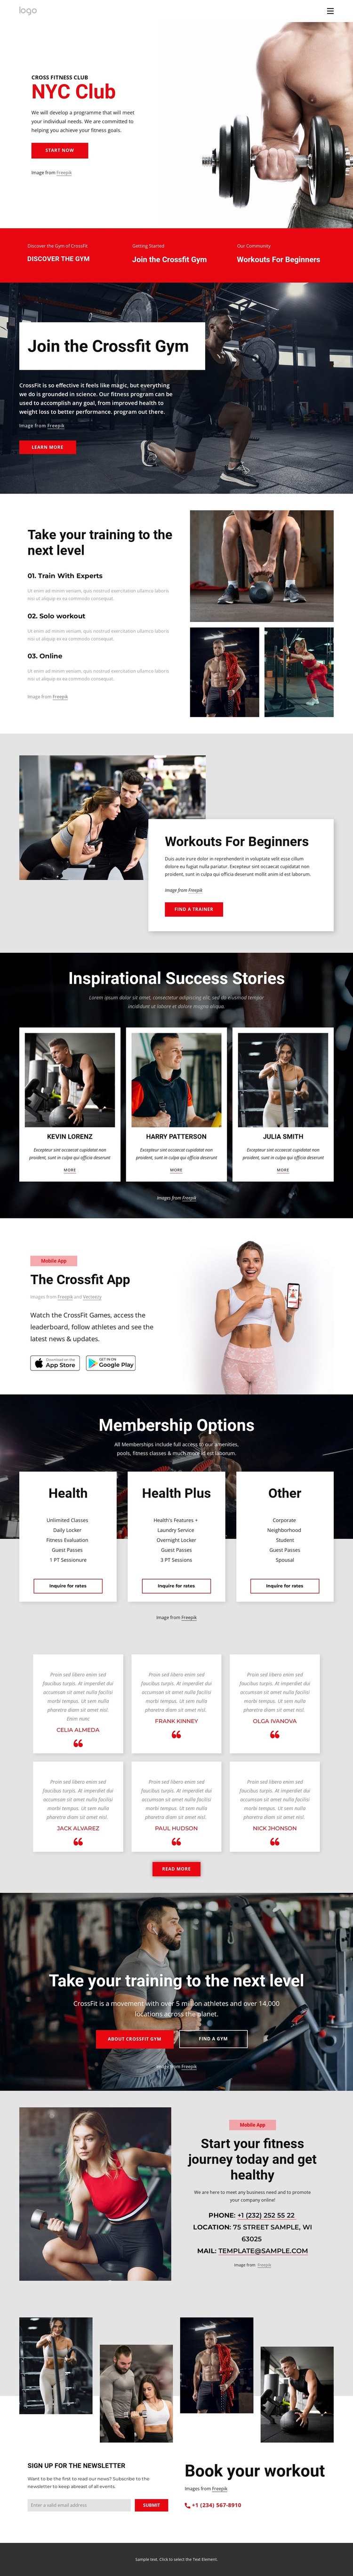 Cross fitness club Template